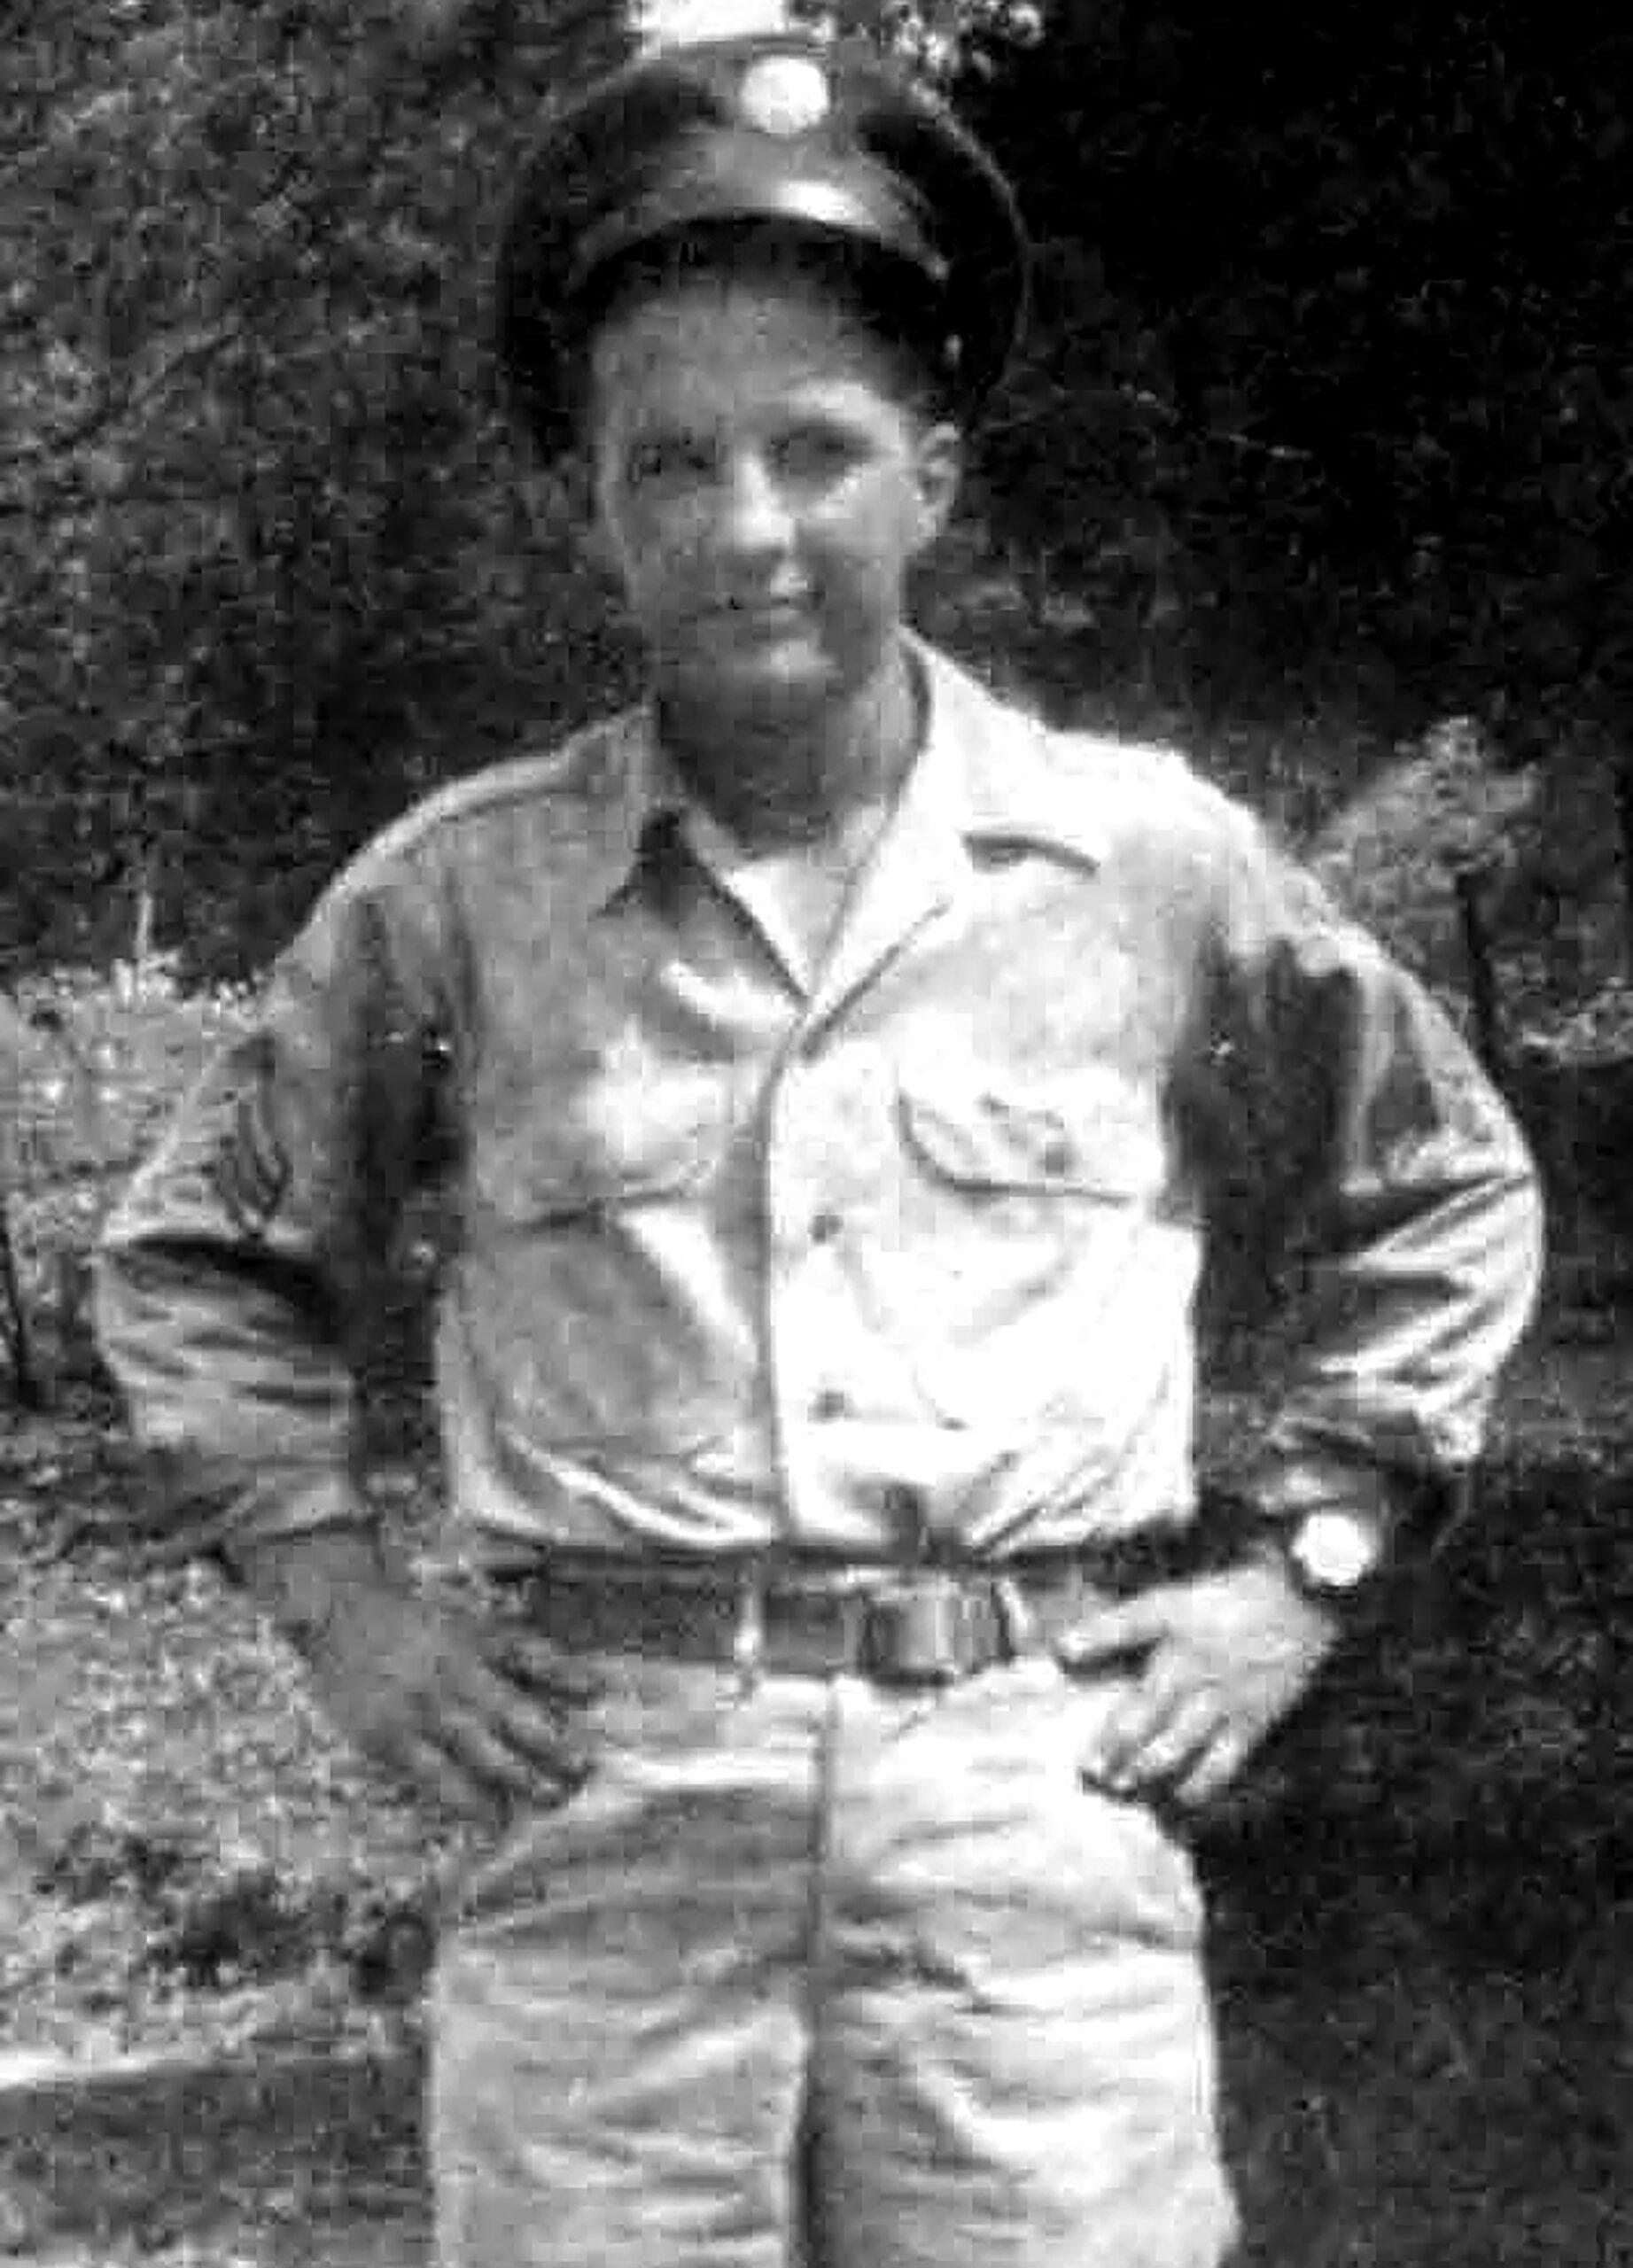 A black and white photo of Gene Moran in uniform